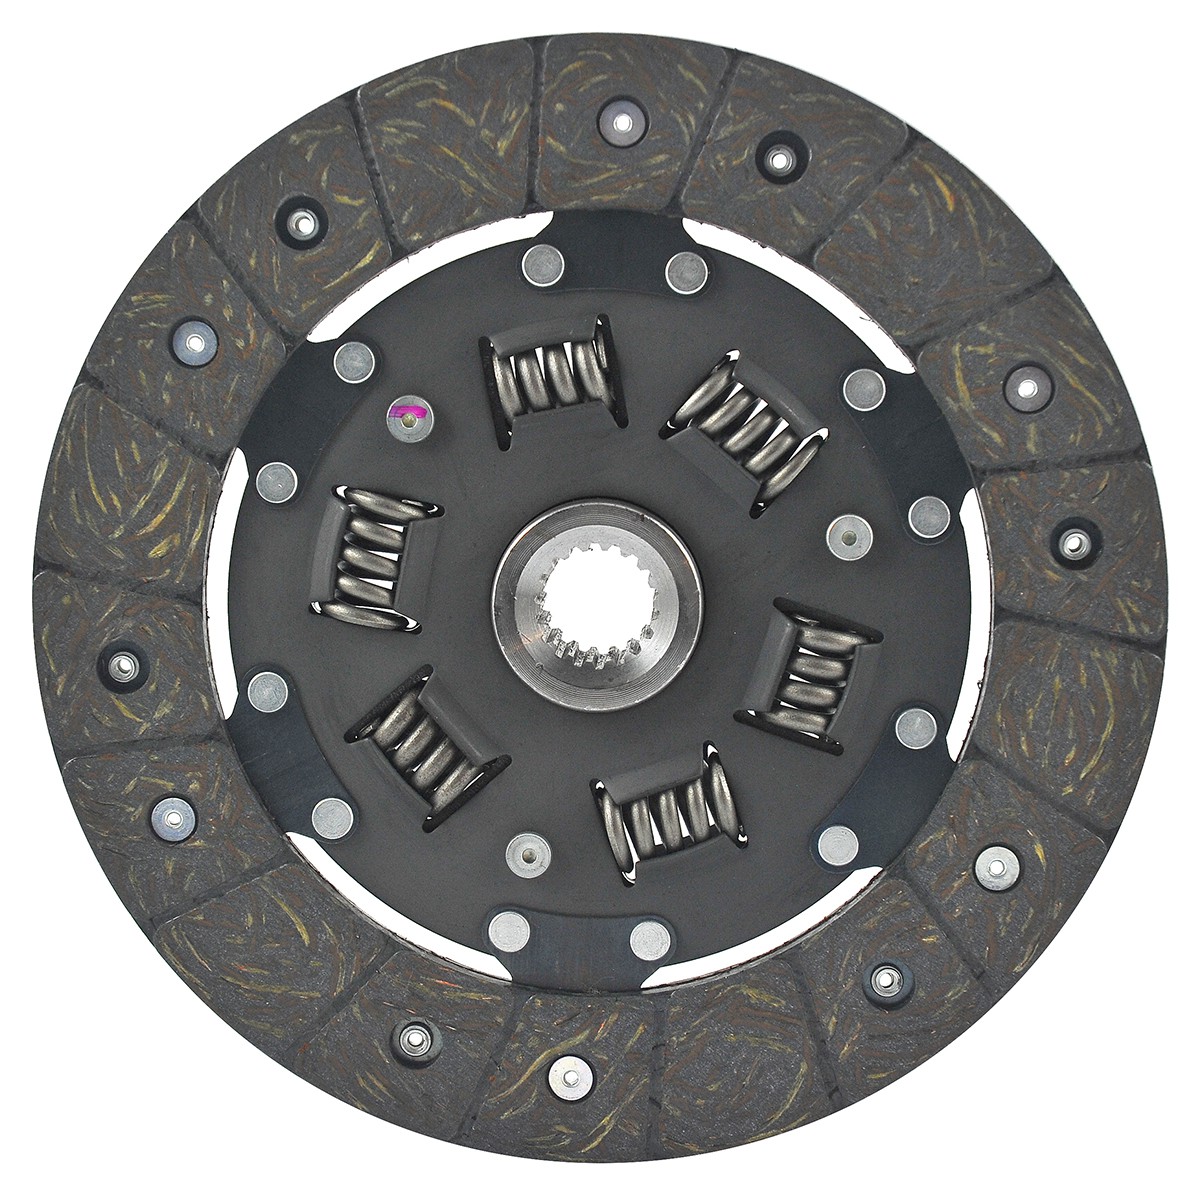 Clutch disc / 18T / Ø20 x 184 mm / 7-1/2" / Iseki TU/TM/TX / 1427-120-2500-00 / 32002